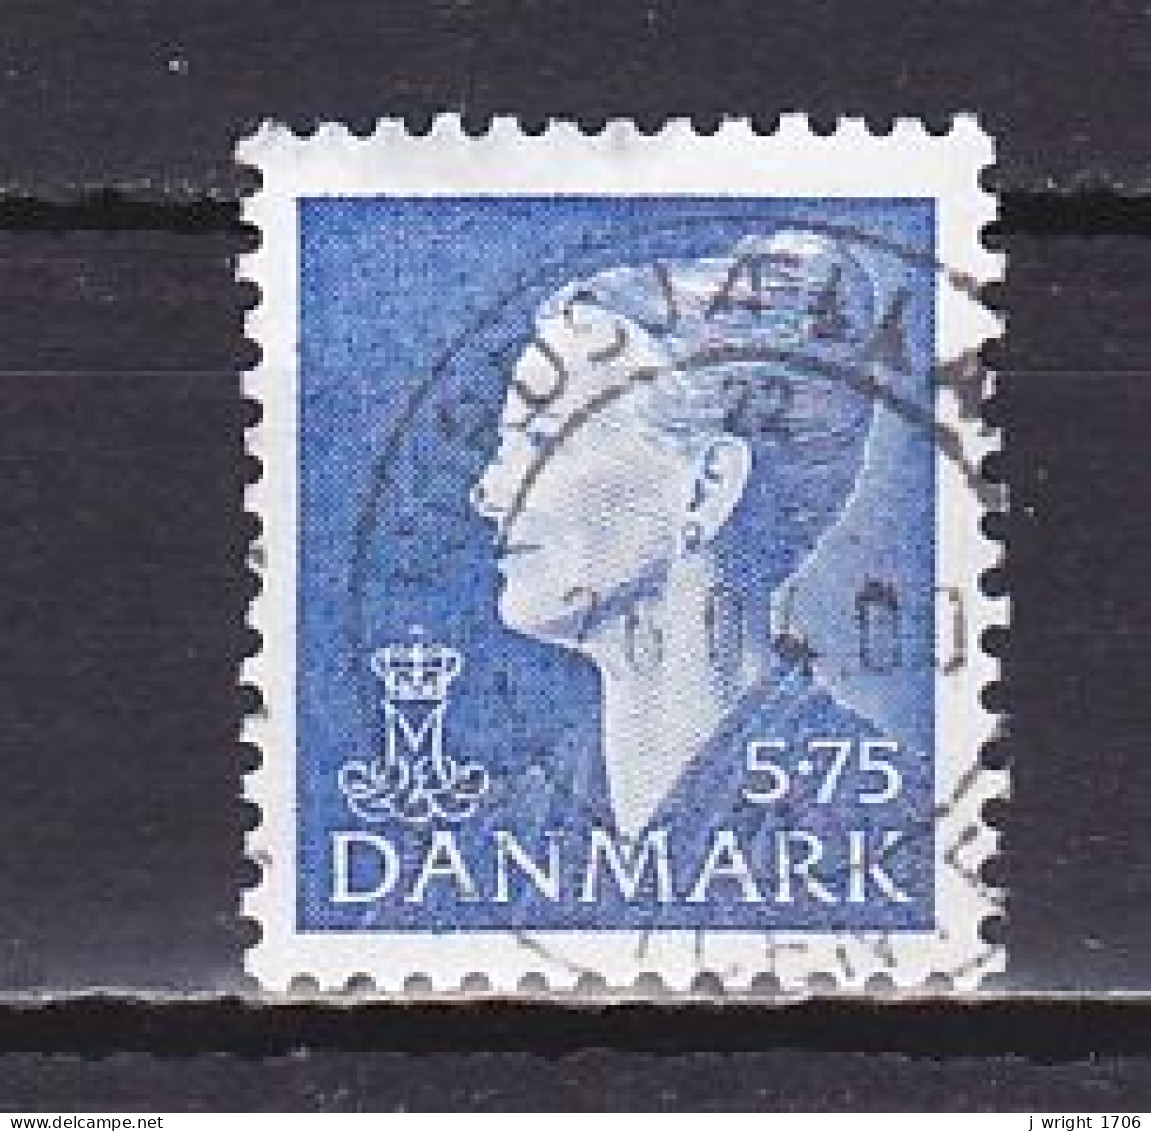 Denmark, 2000, Queen Margrethe II, 5.75kr, USED - Oblitérés